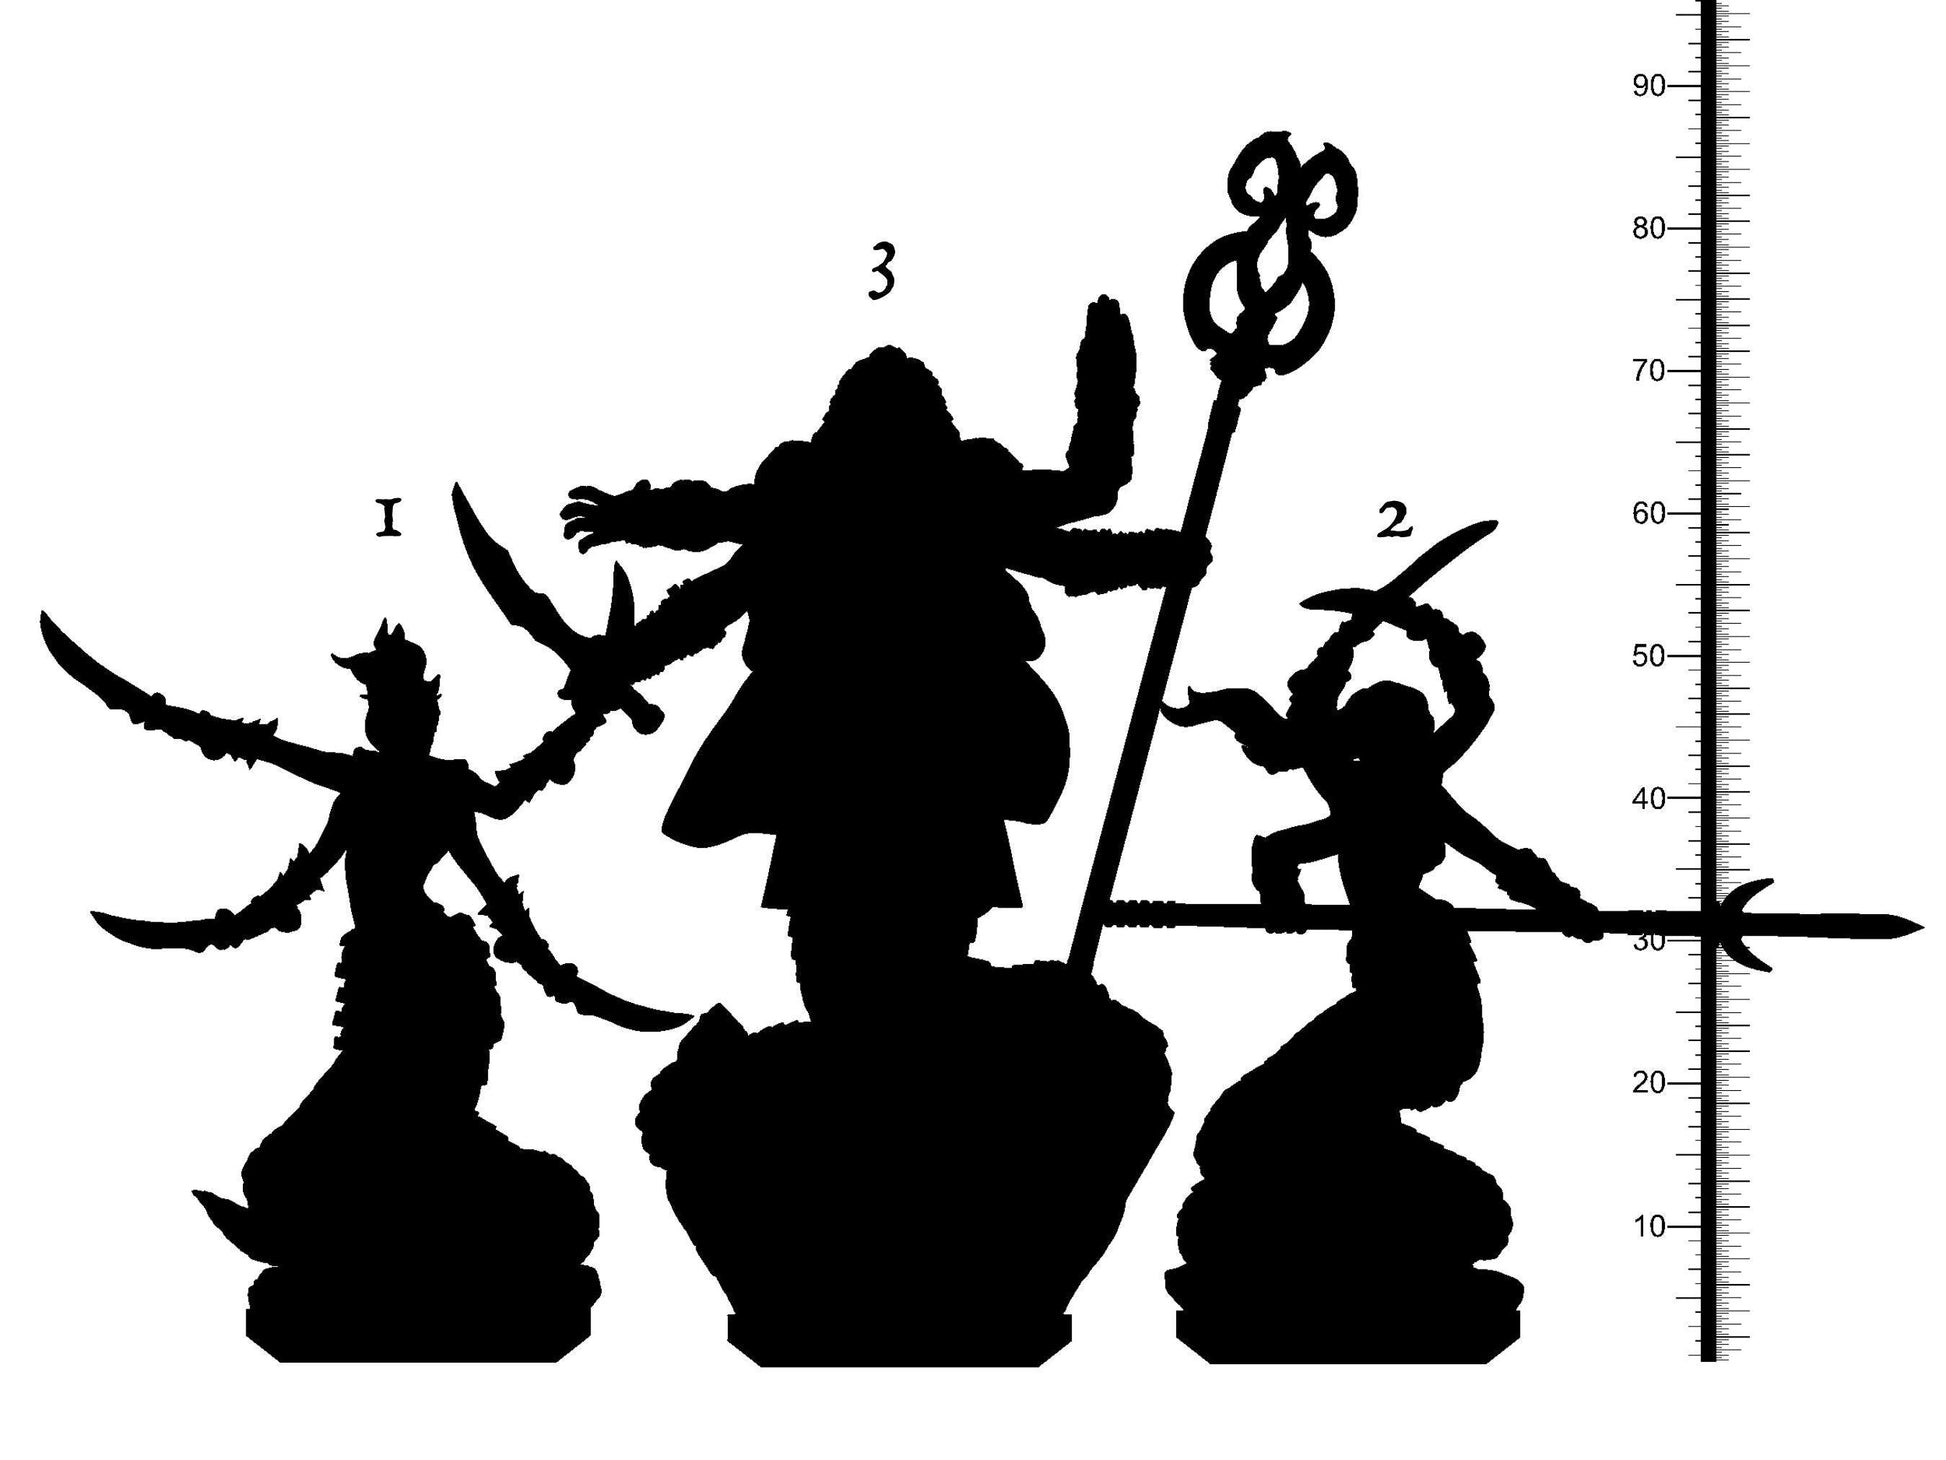 Naga miniature India | Tabletop Gaming | DnD Miniature | Dungeons and Dragons DnD 5e | Hindu figurine - Plague Miniatures shop for DnD Miniatures